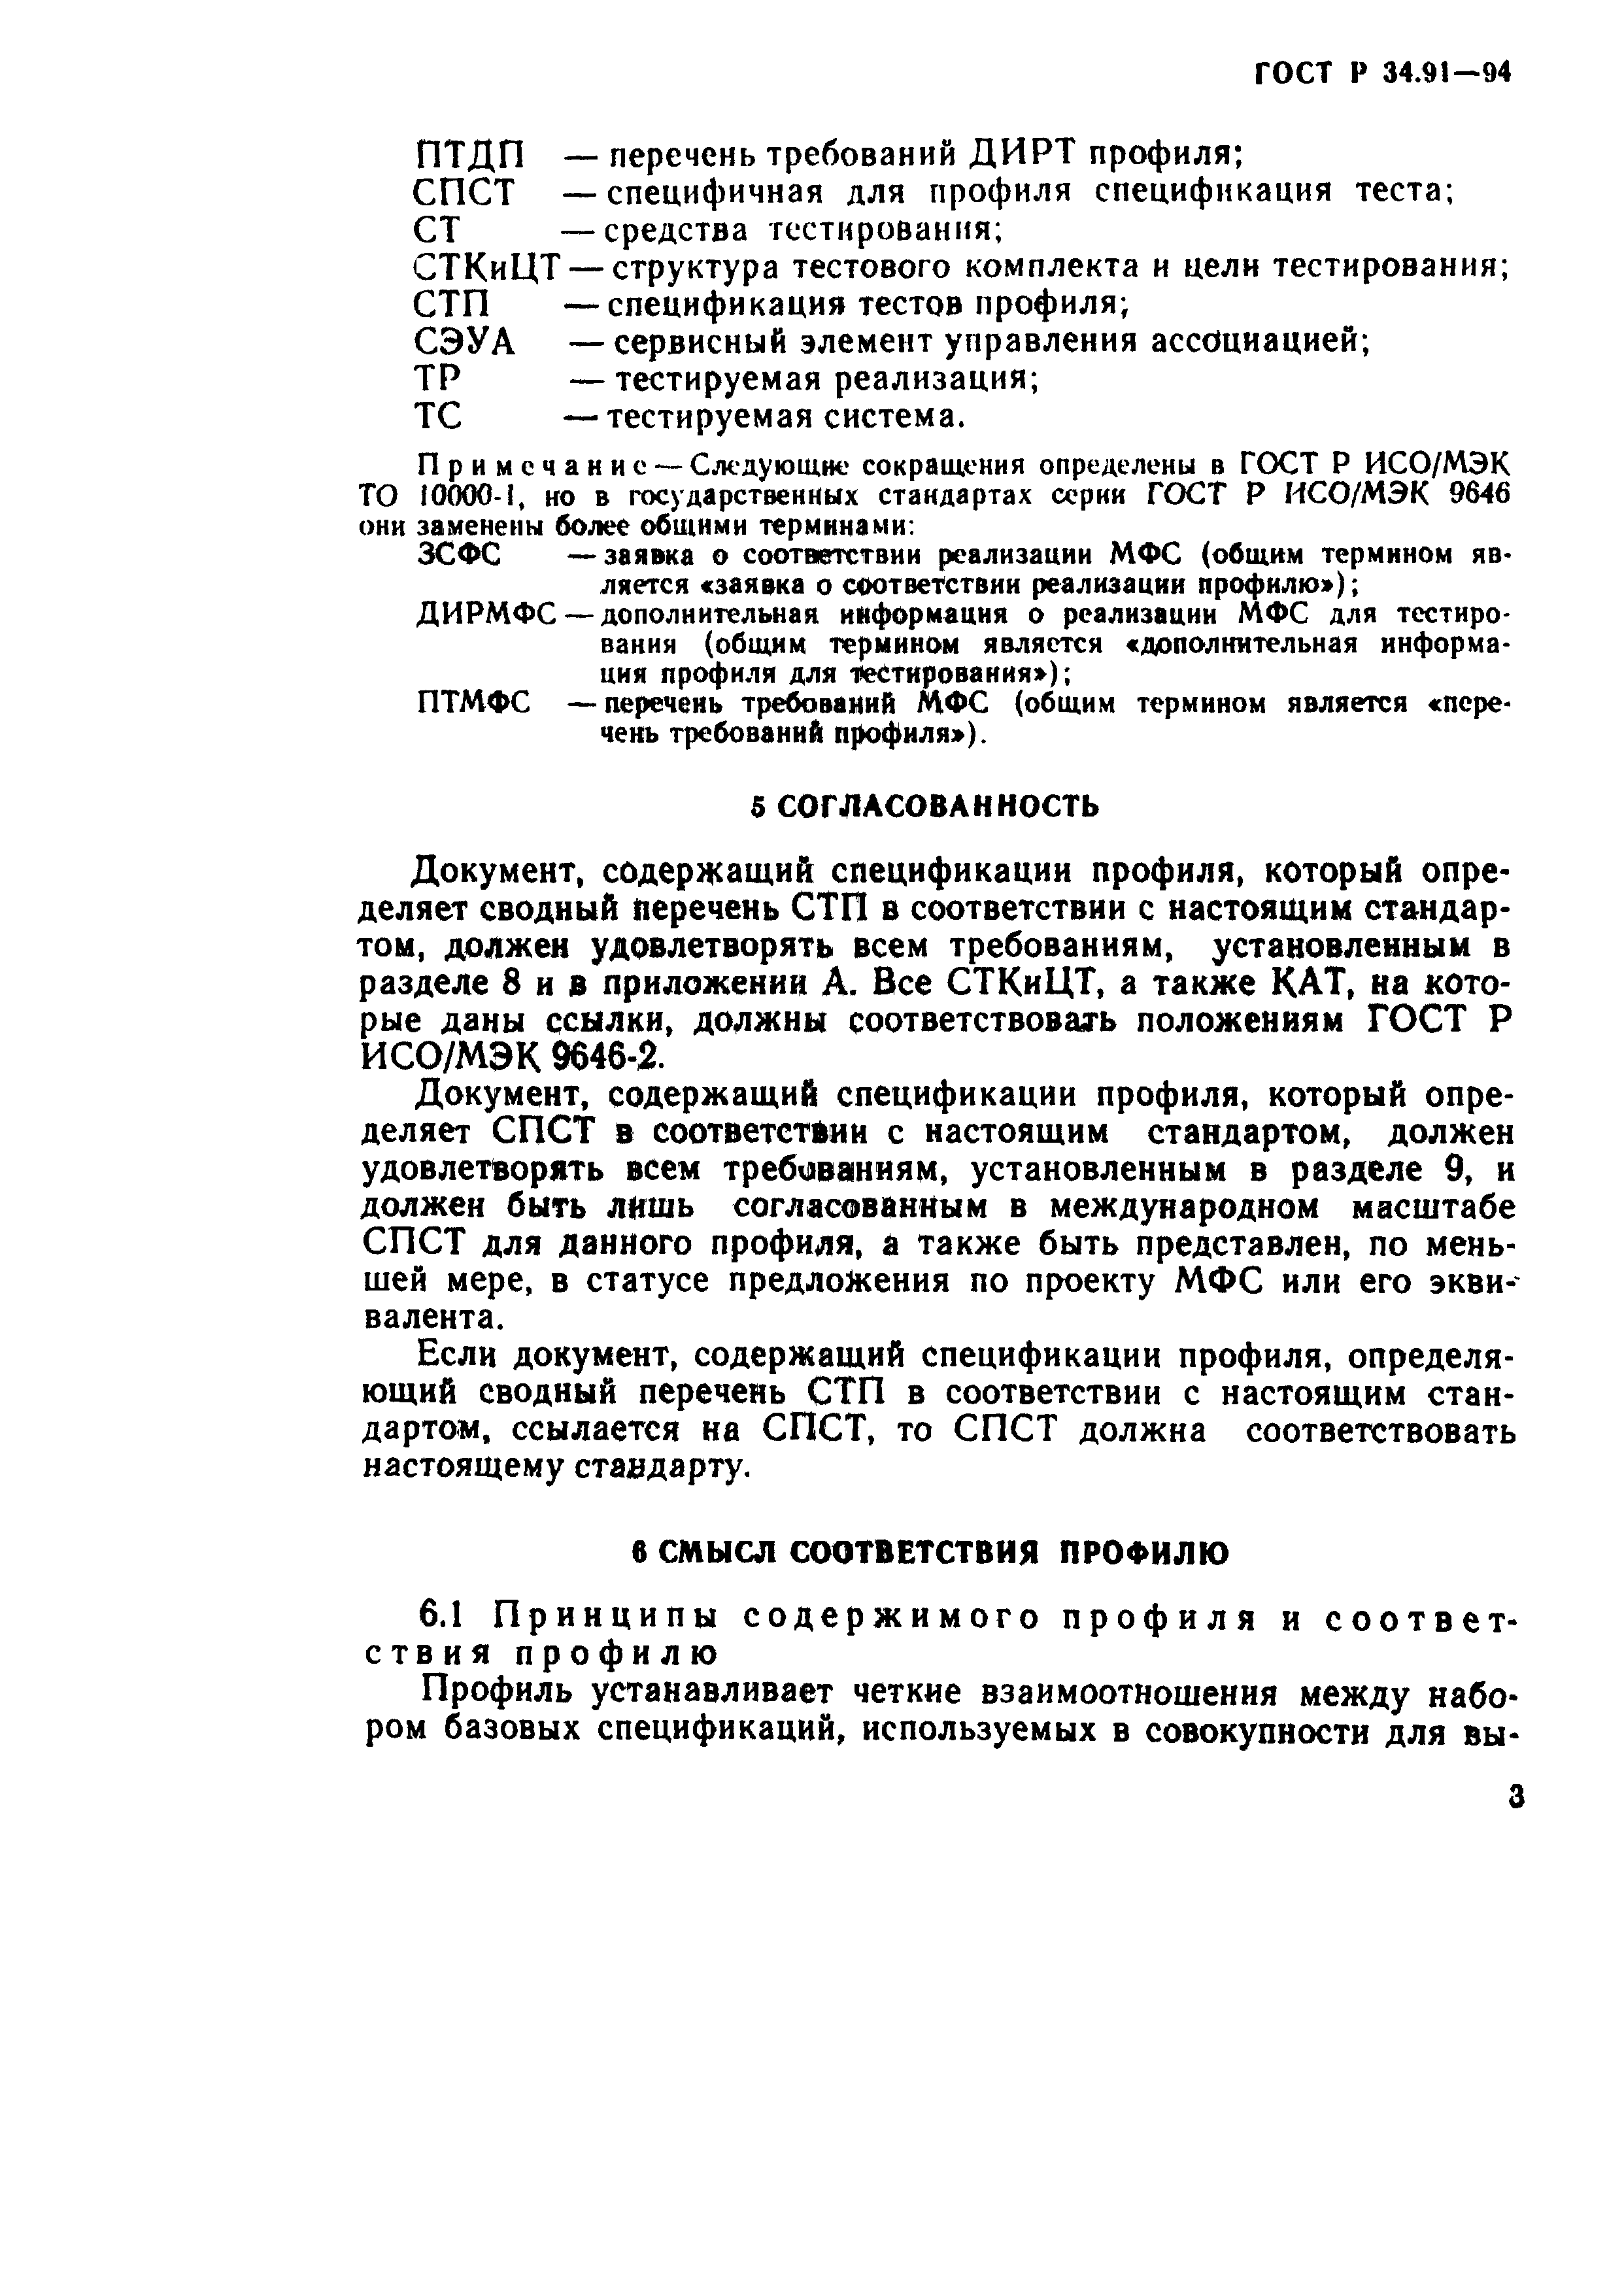 ГОСТ Р 34.91-94